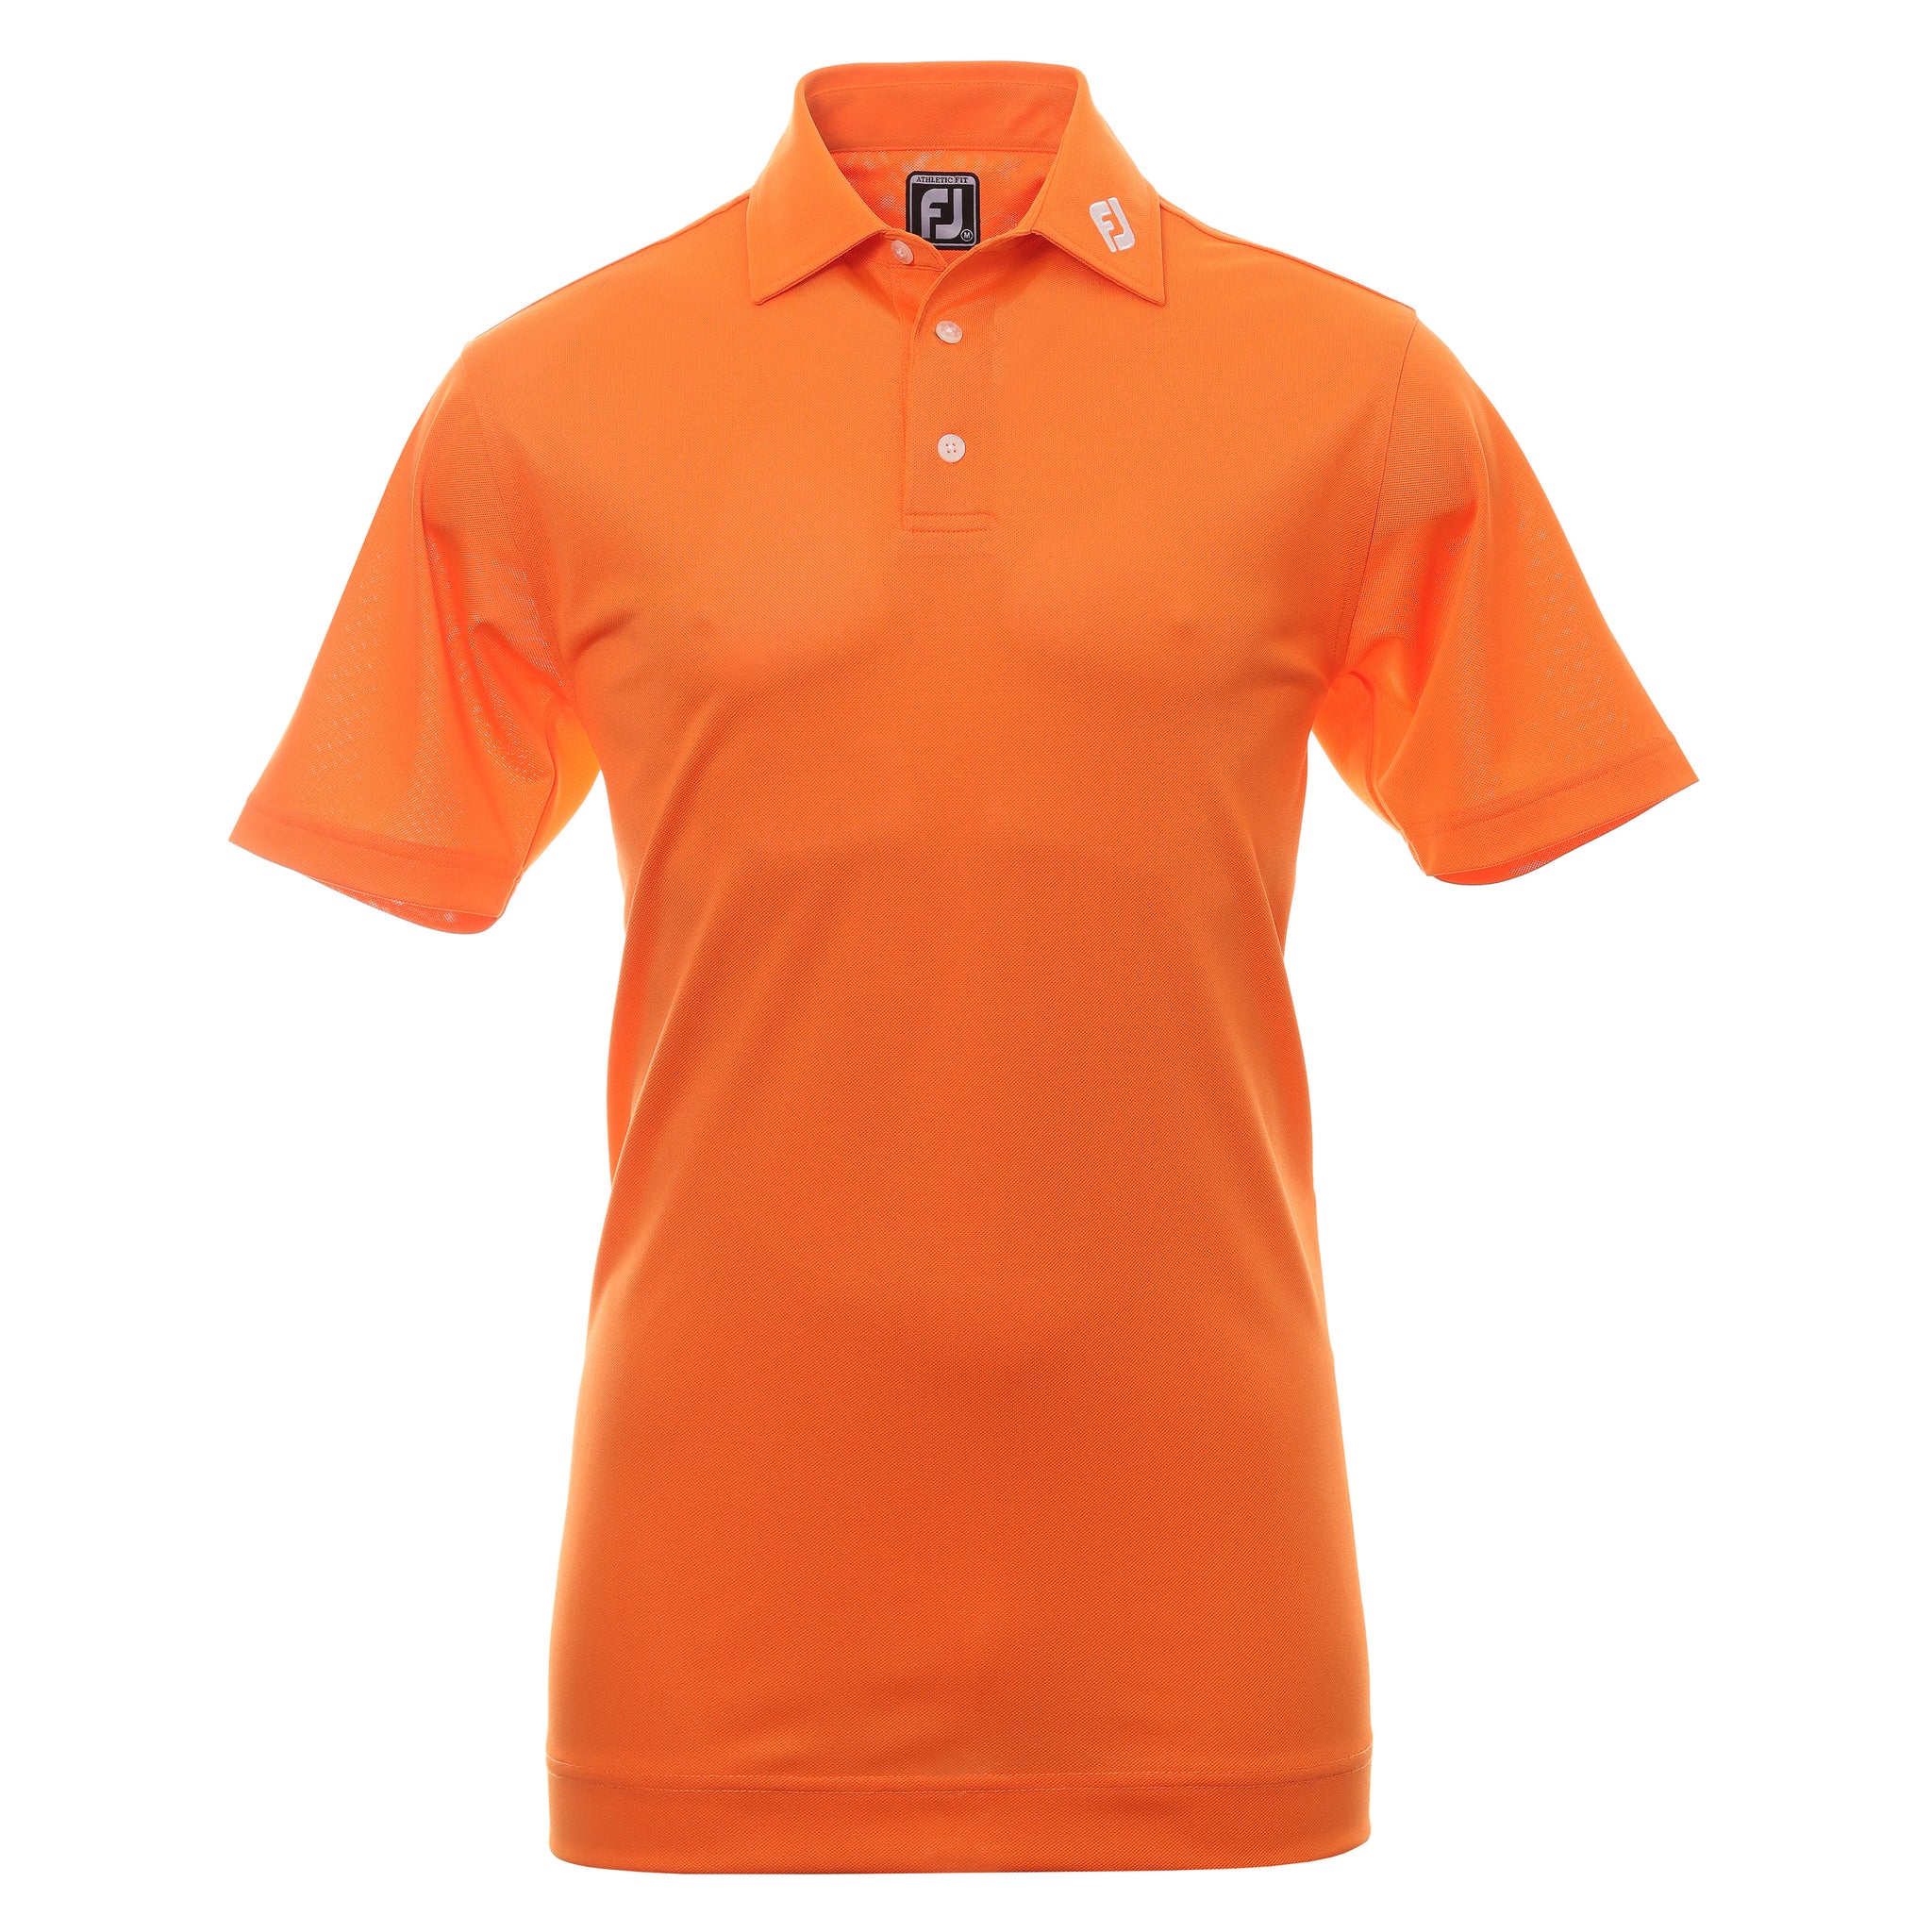 footjoy-stretch-pique-solid-golf-shirt-80131-orange